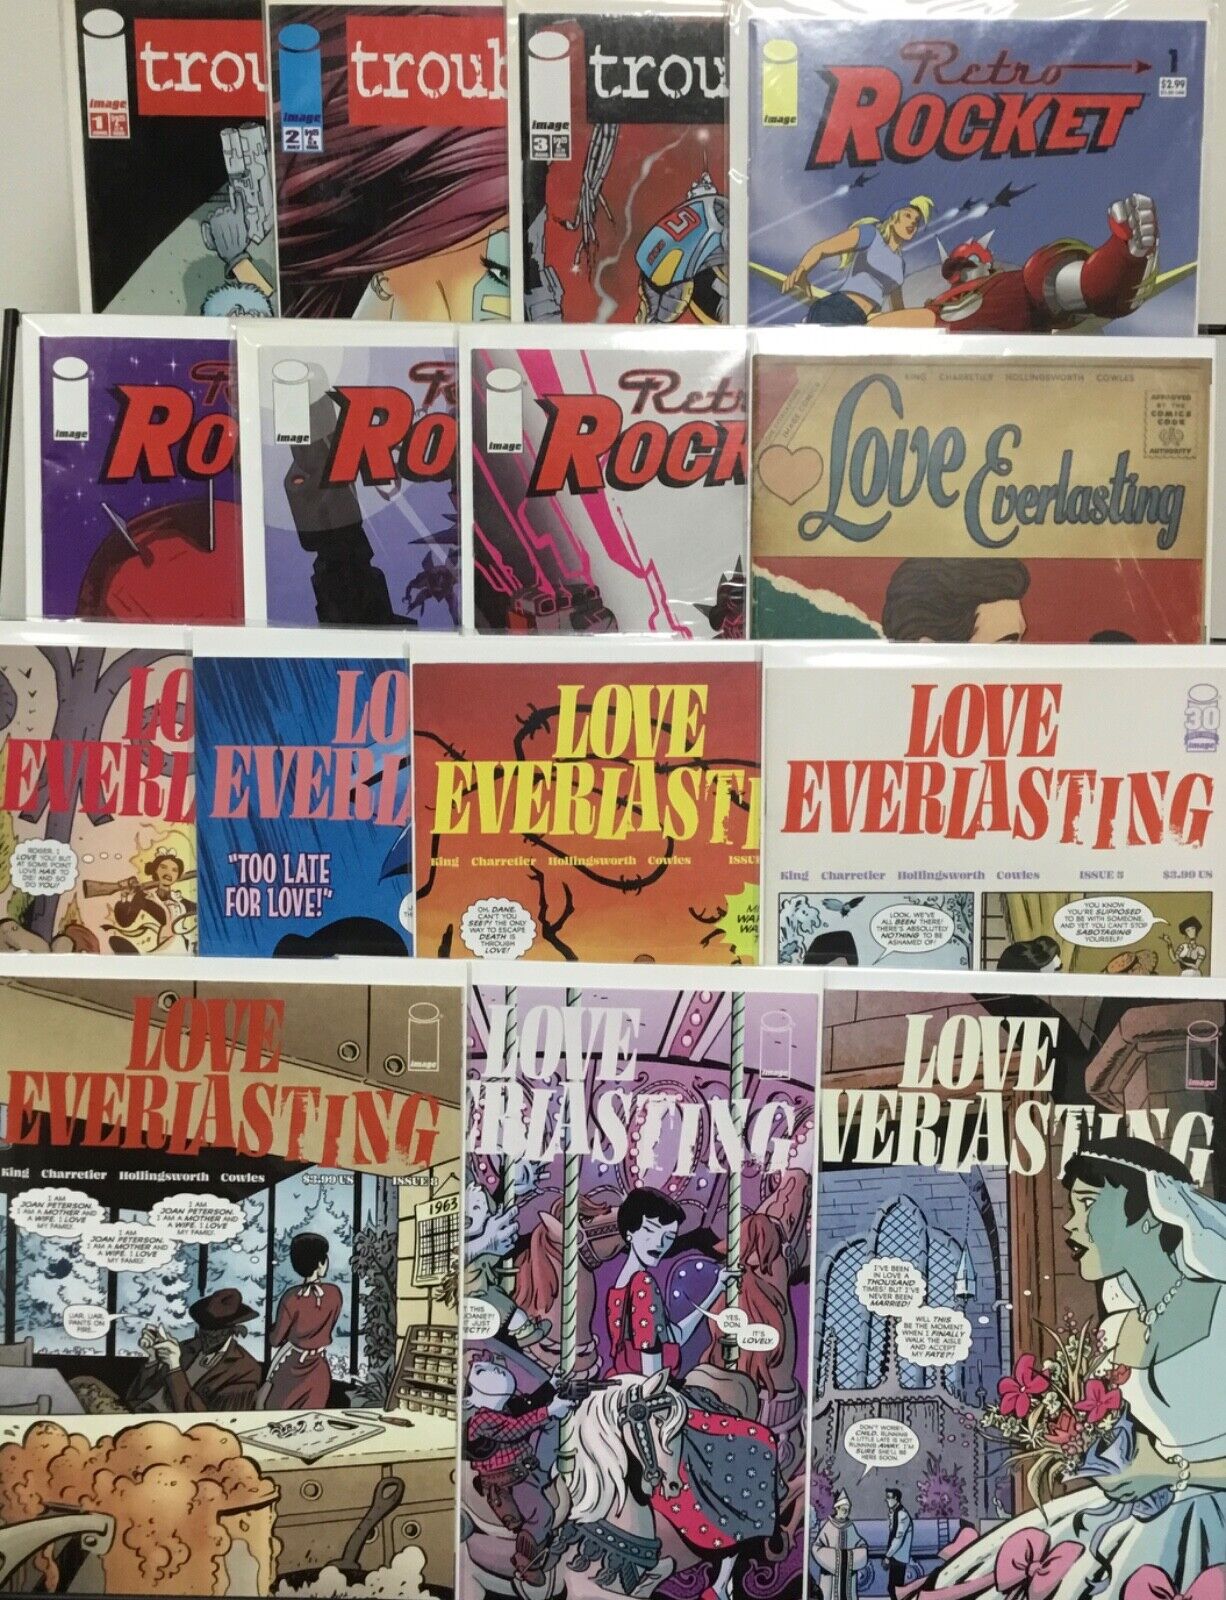 Image Comics Retro Rocket 1-4, Troubleman 1-3, Love Everlasting 1-8